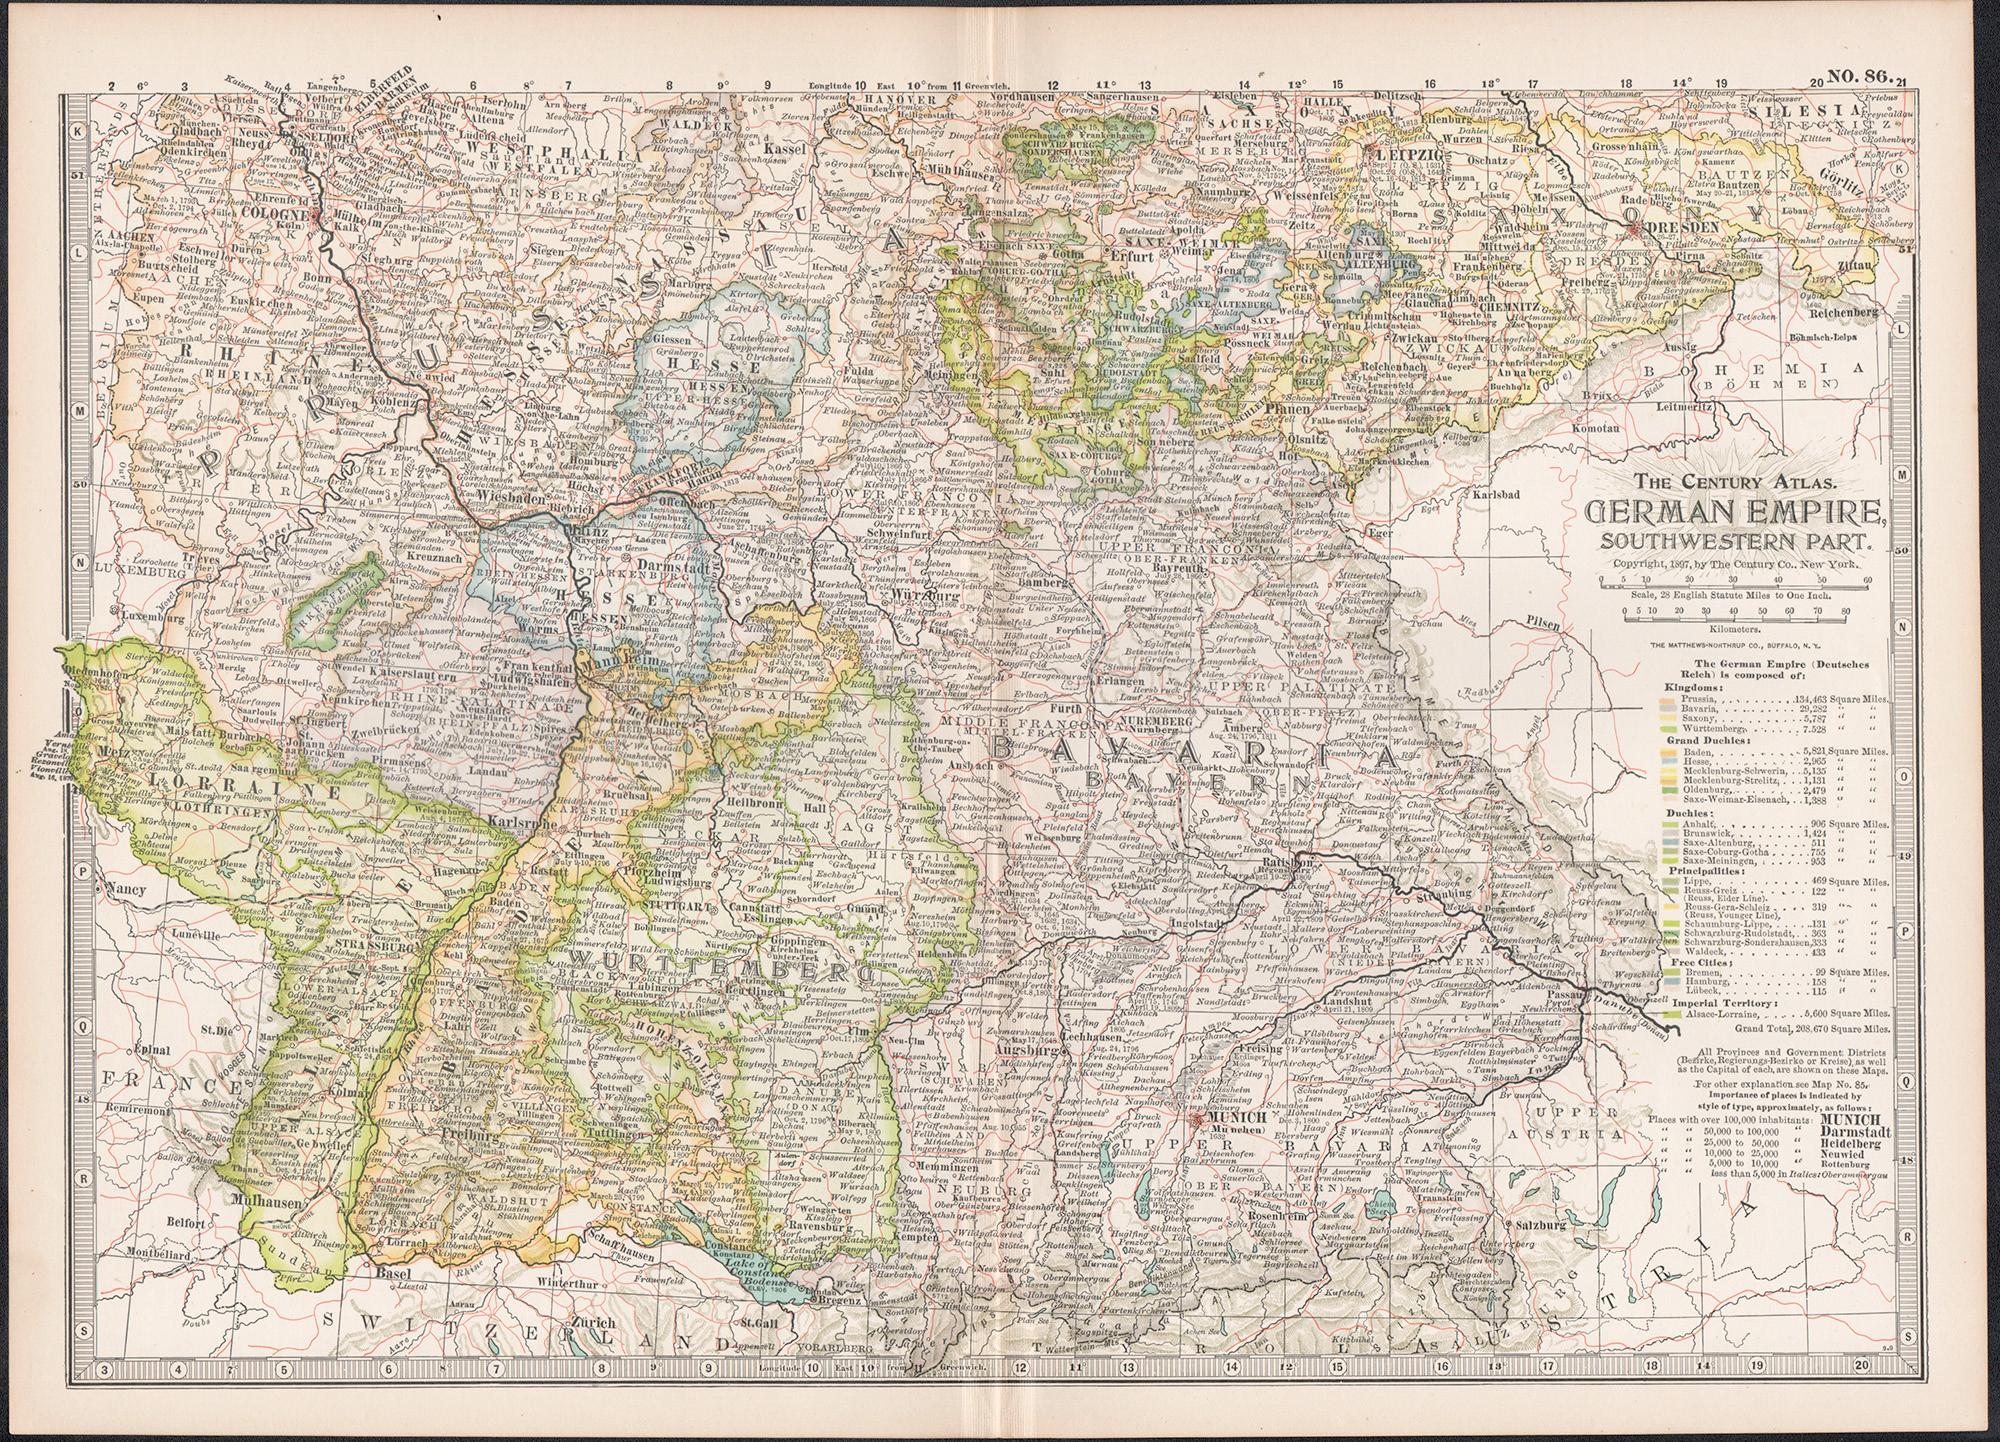 German Empire, Southwestern Part. Century Atlas antique vintage map - Print by Unknown